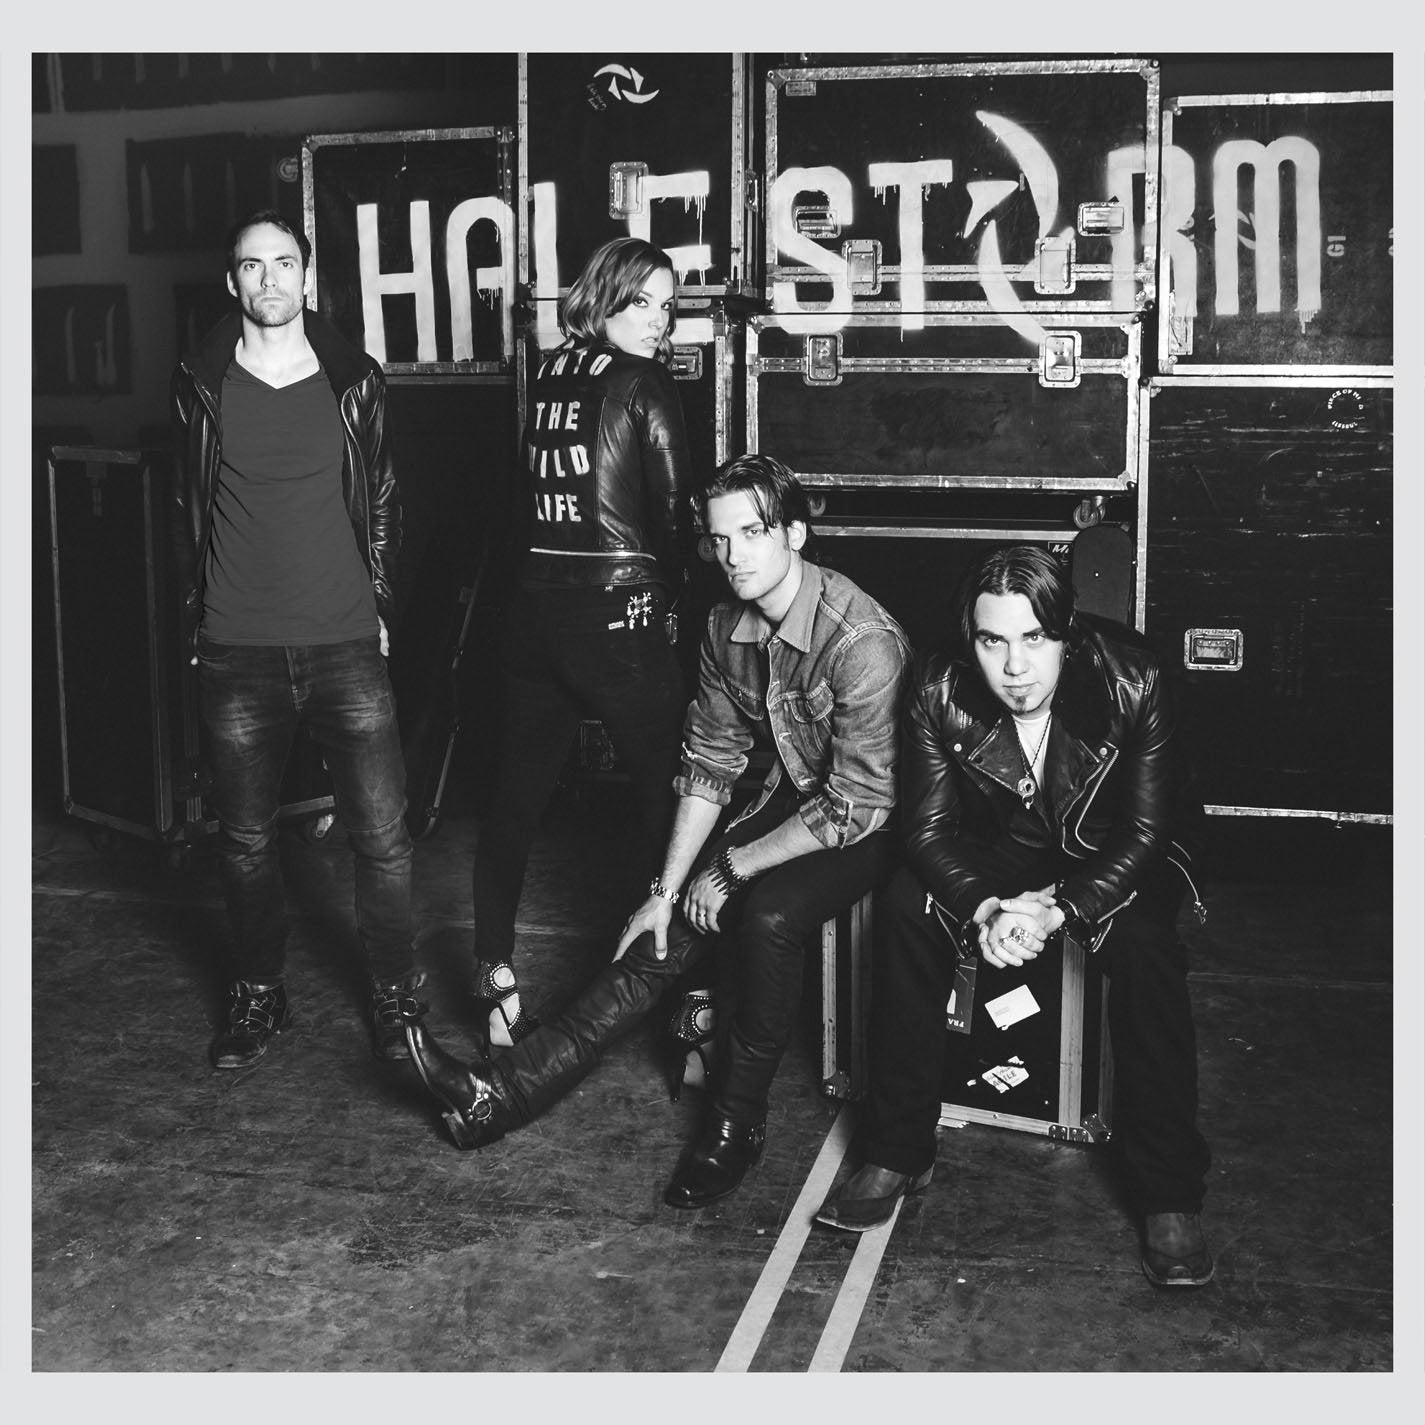 Halestorm "Into The Wildlife" CD